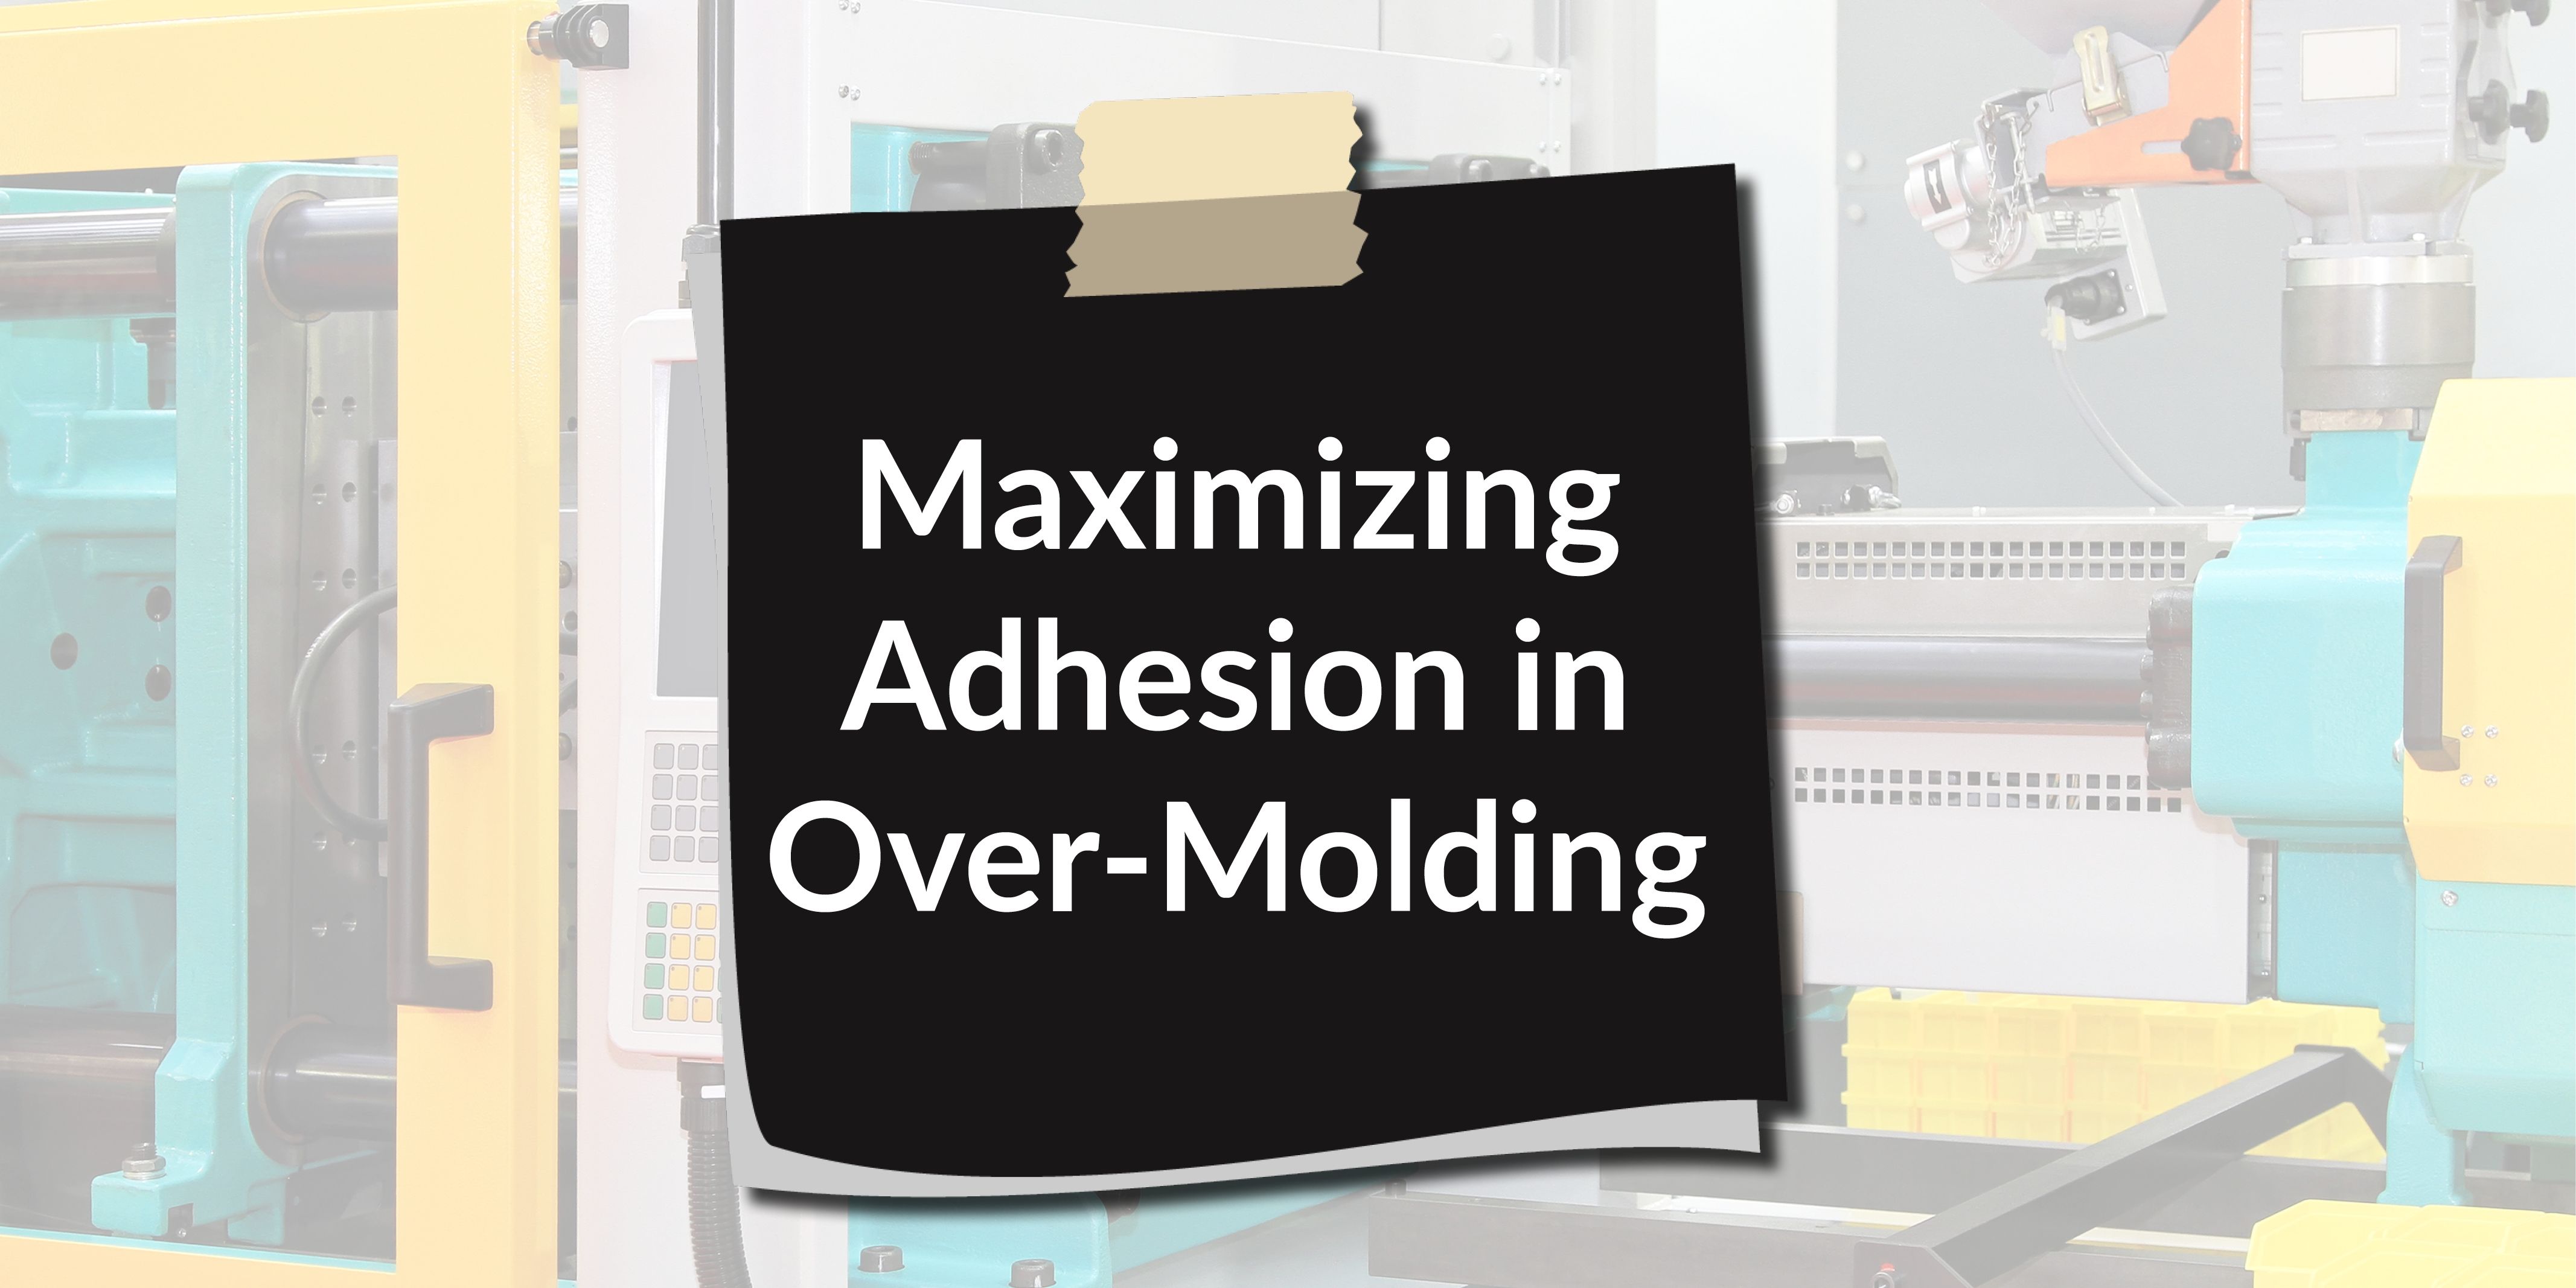 Maximizing-Adhesion-in-Over-Molding-Social-Media-Post